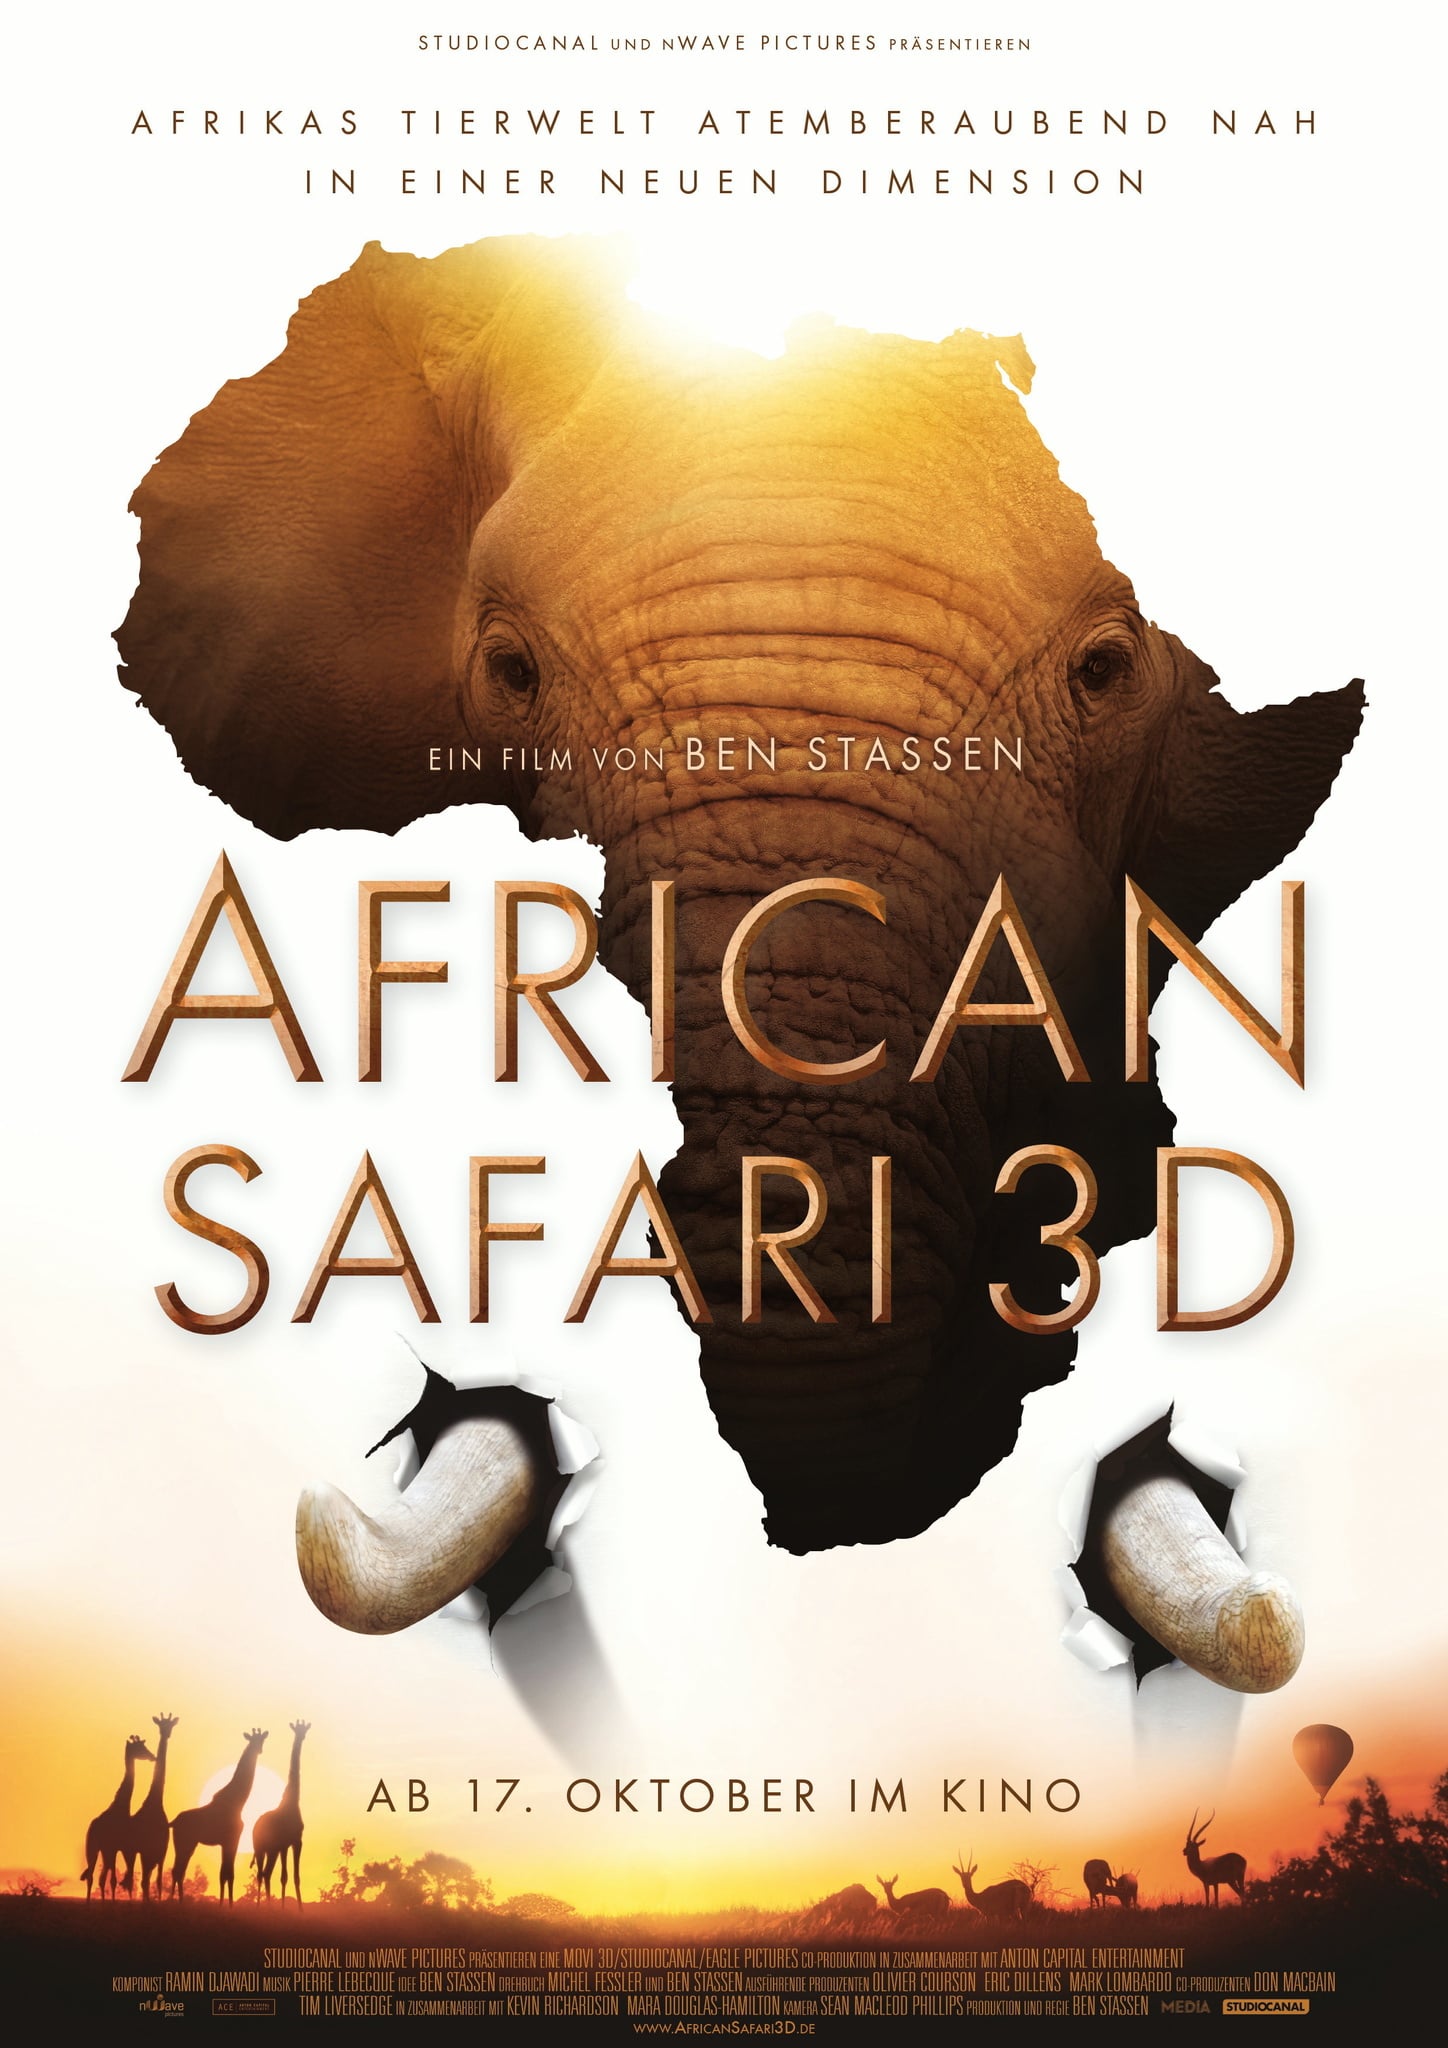 Plakat von "African Safari 3D"